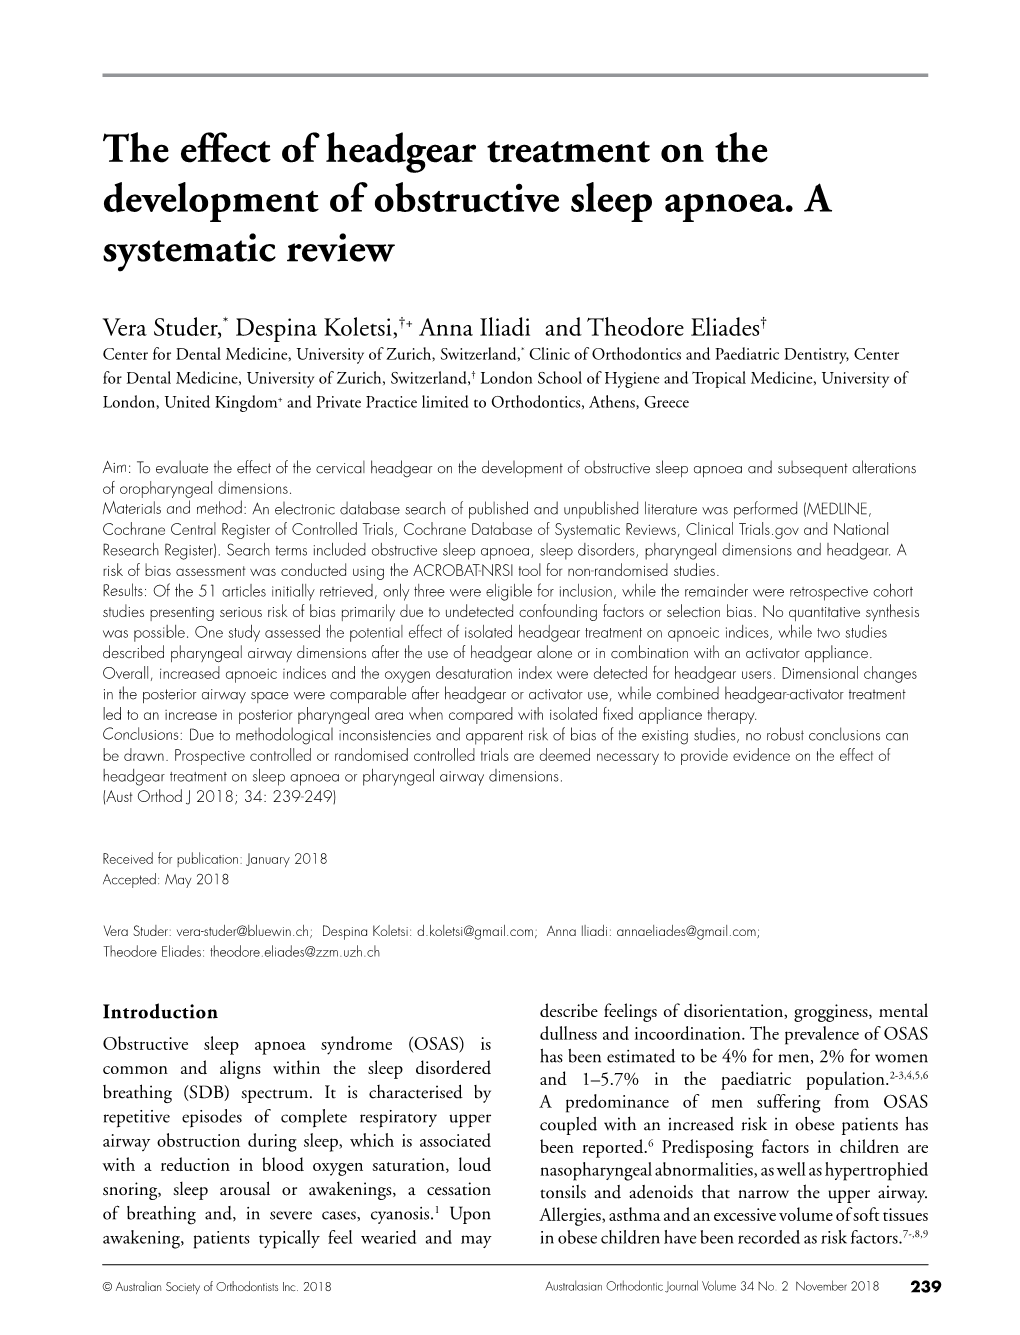 The Effect of Headgear Treatment on the Development of Obstructive Sleep Apnoea